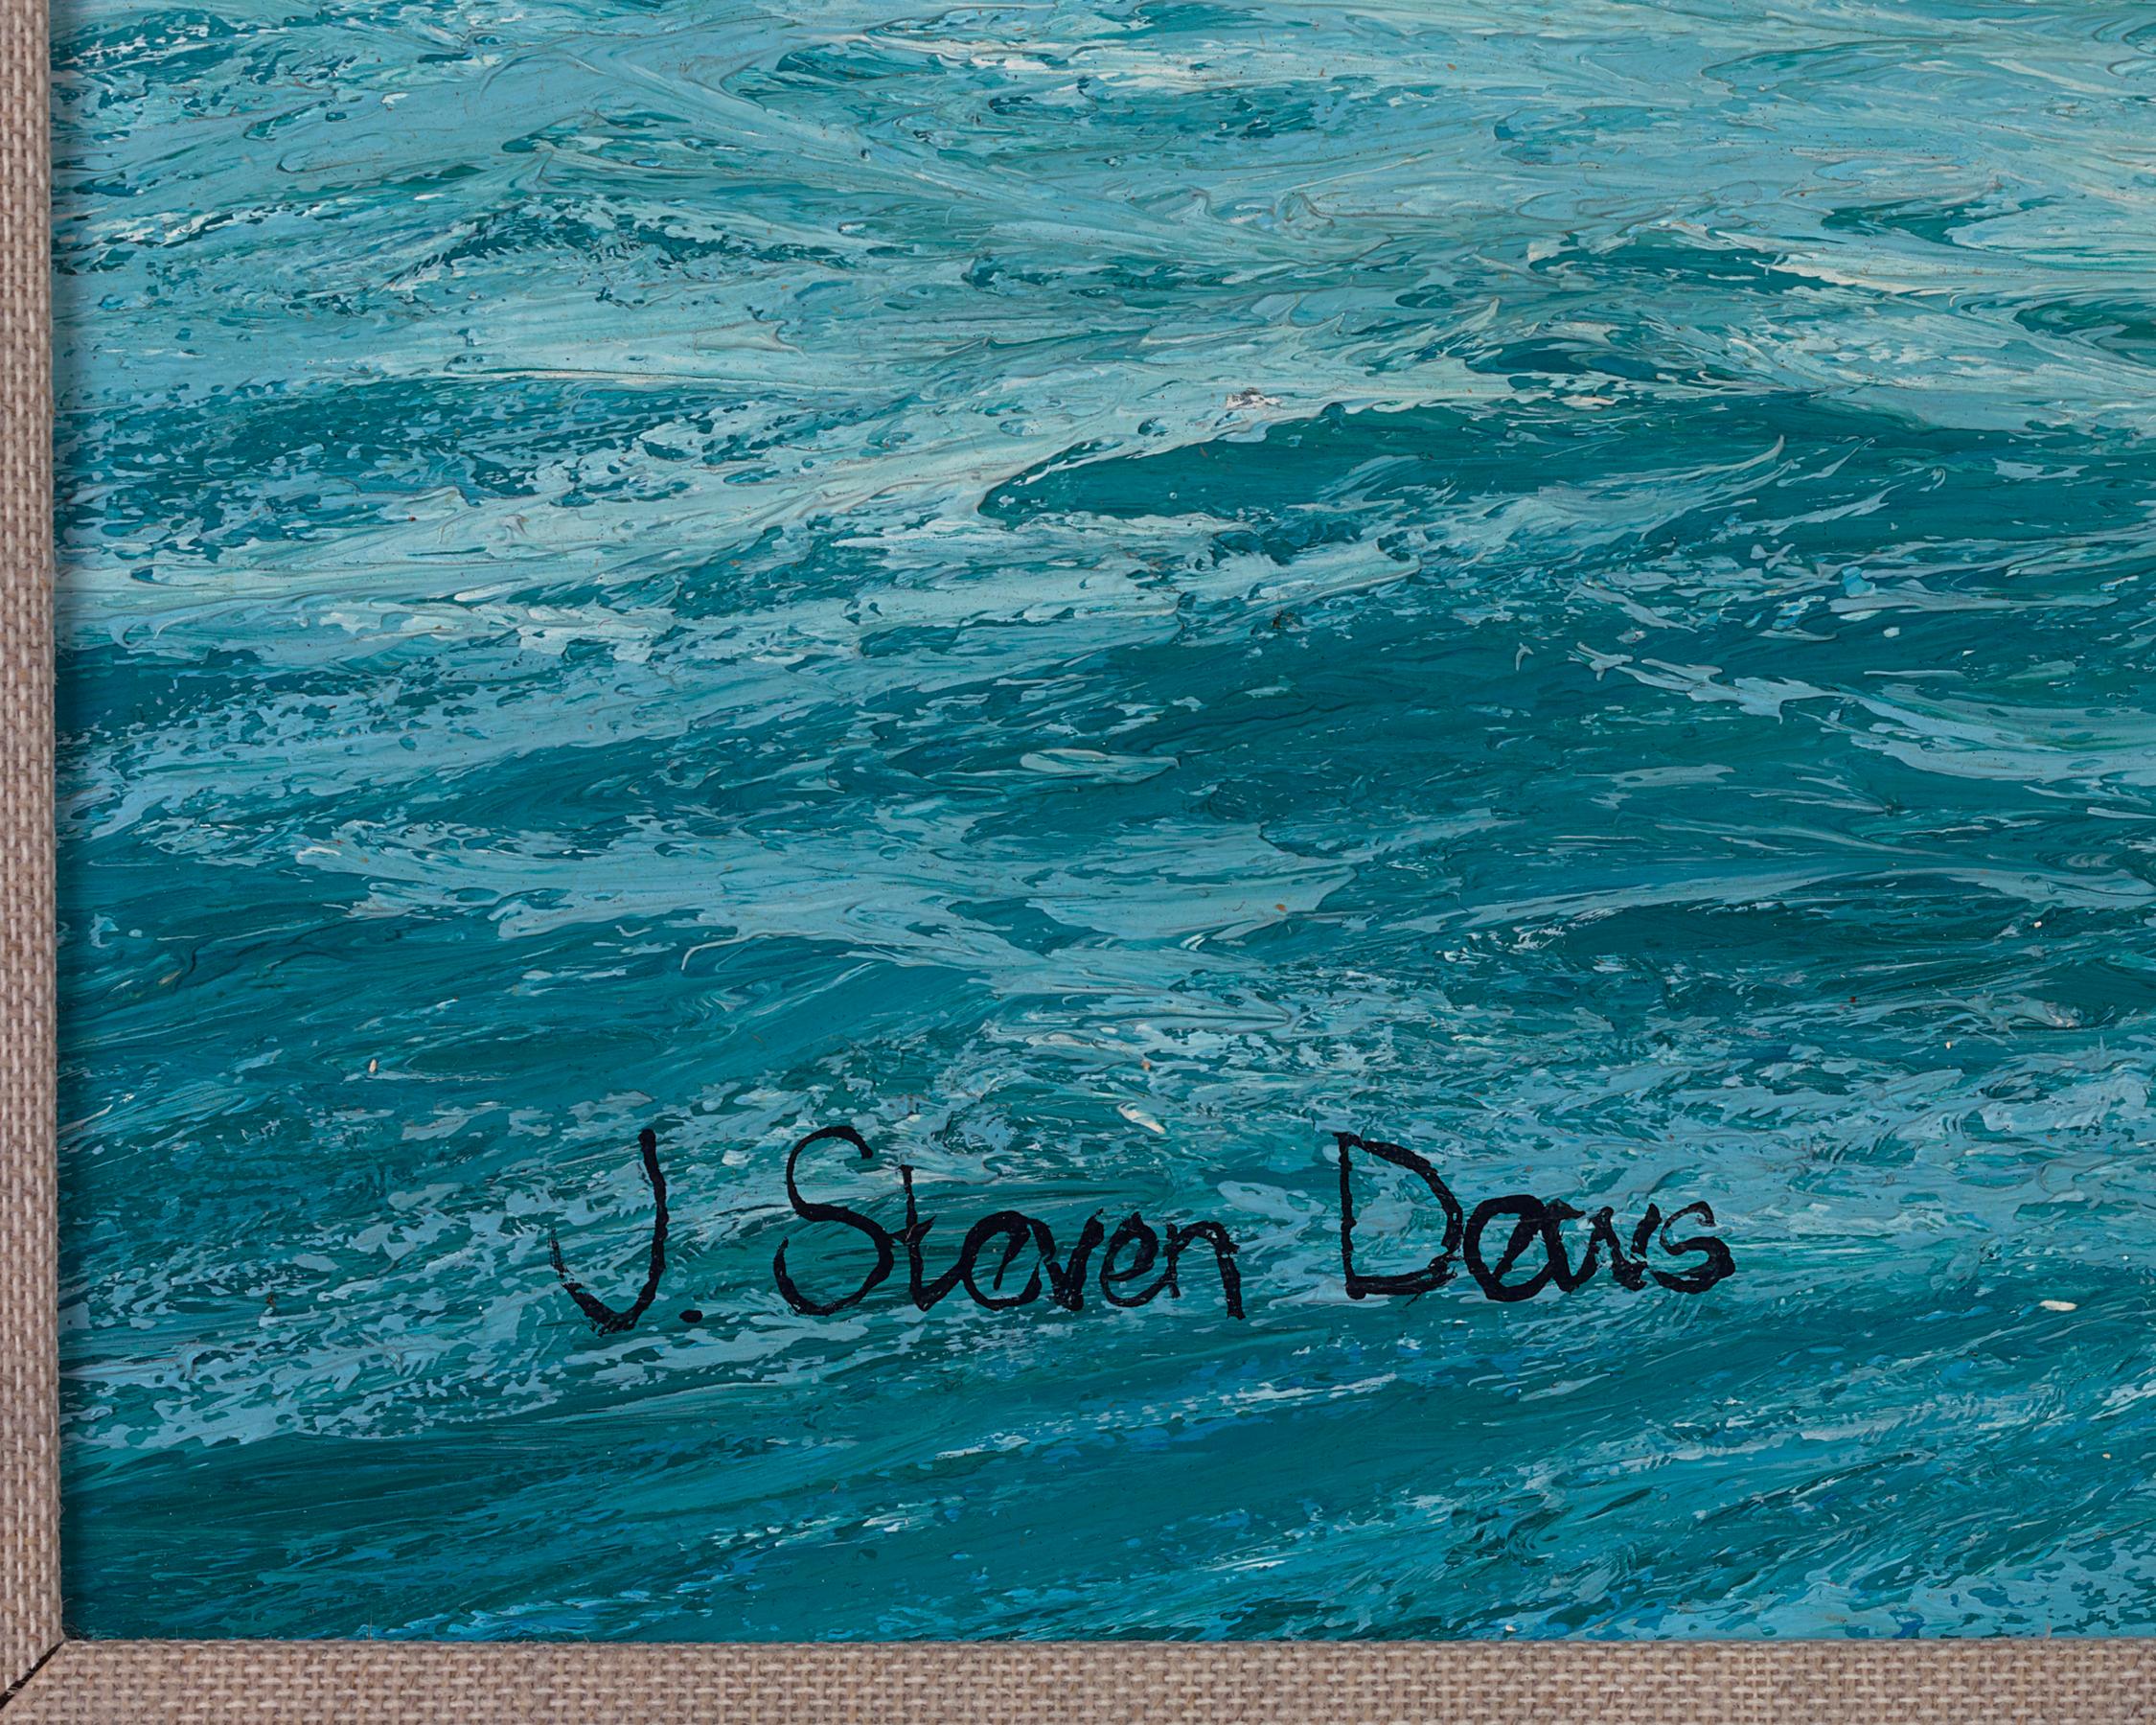 John Steven Dews
b.1949  British

Cutty Sark Entering the River Thames

Signed 